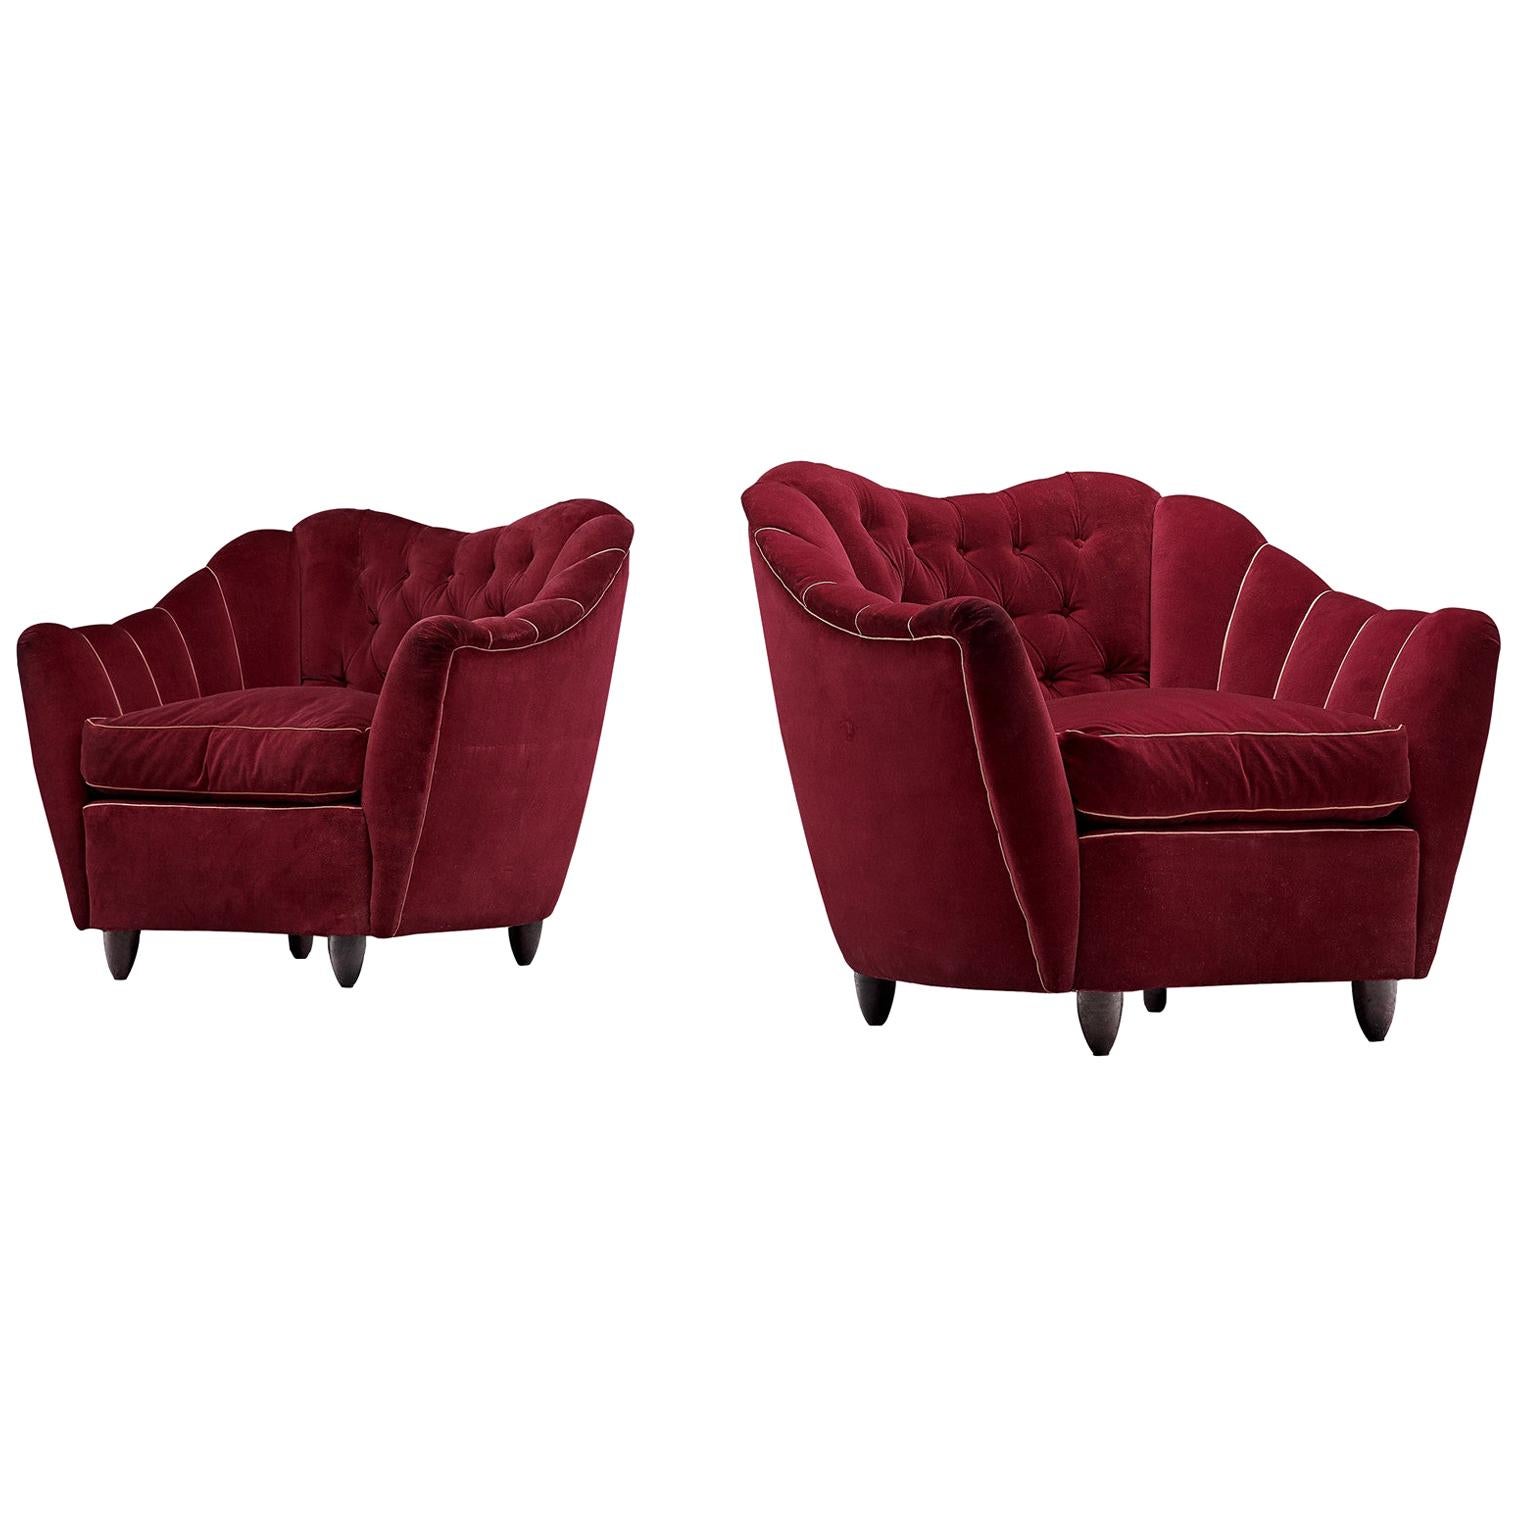 Pair of Italian Lounge Chairs in Bordeaux Velvet